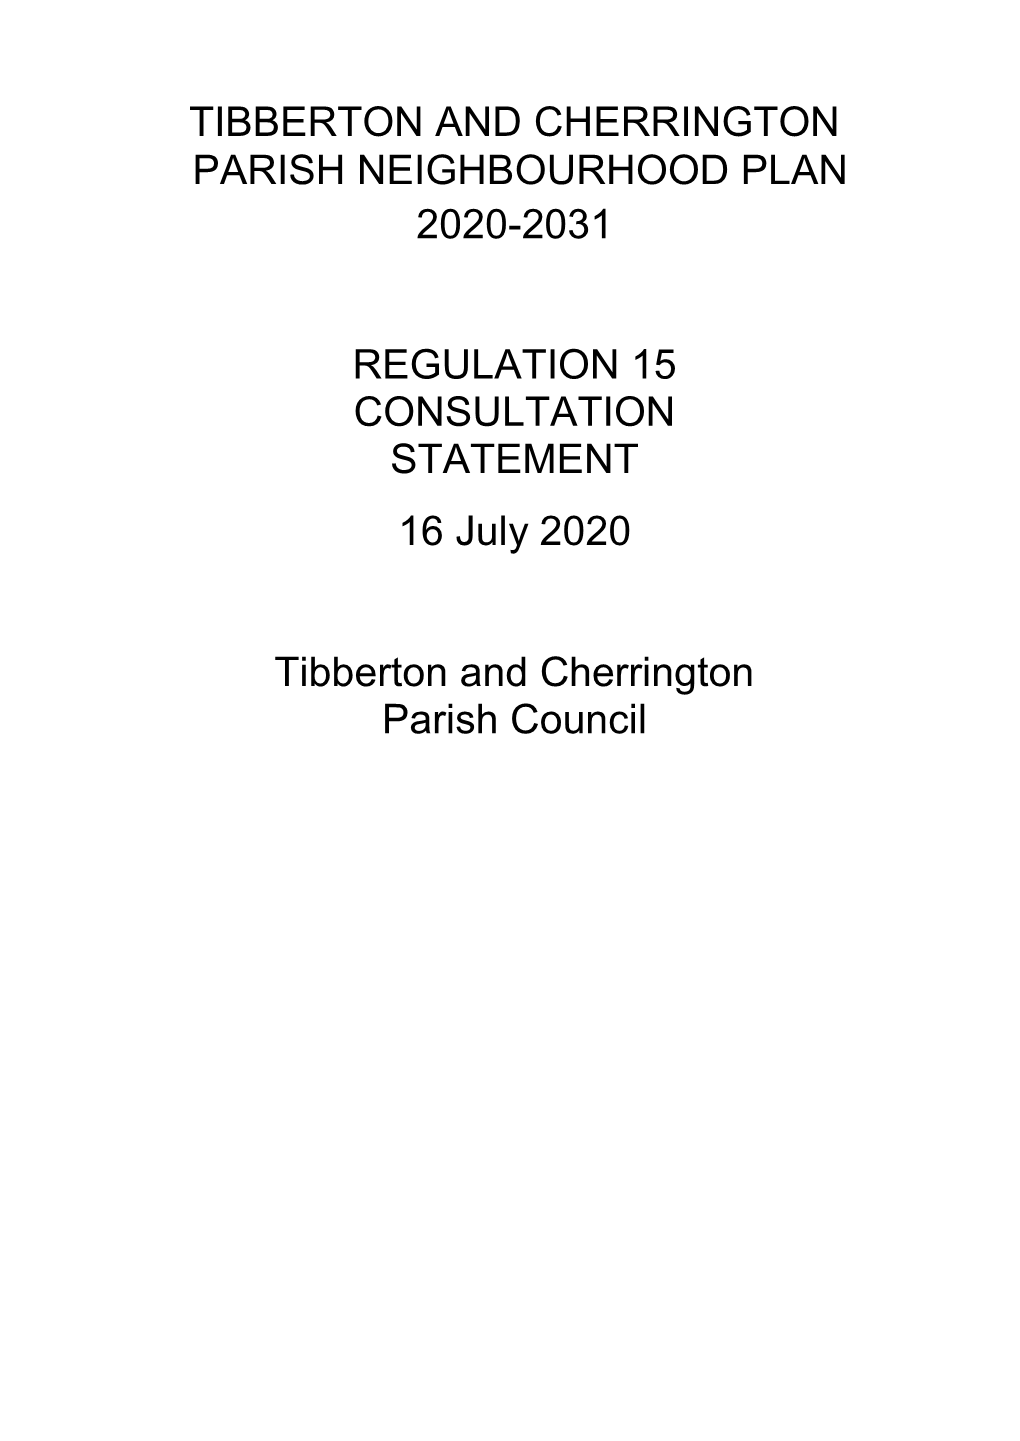 Tibberton and Cherrington Parish Neighbourhood Plan 2020-2031